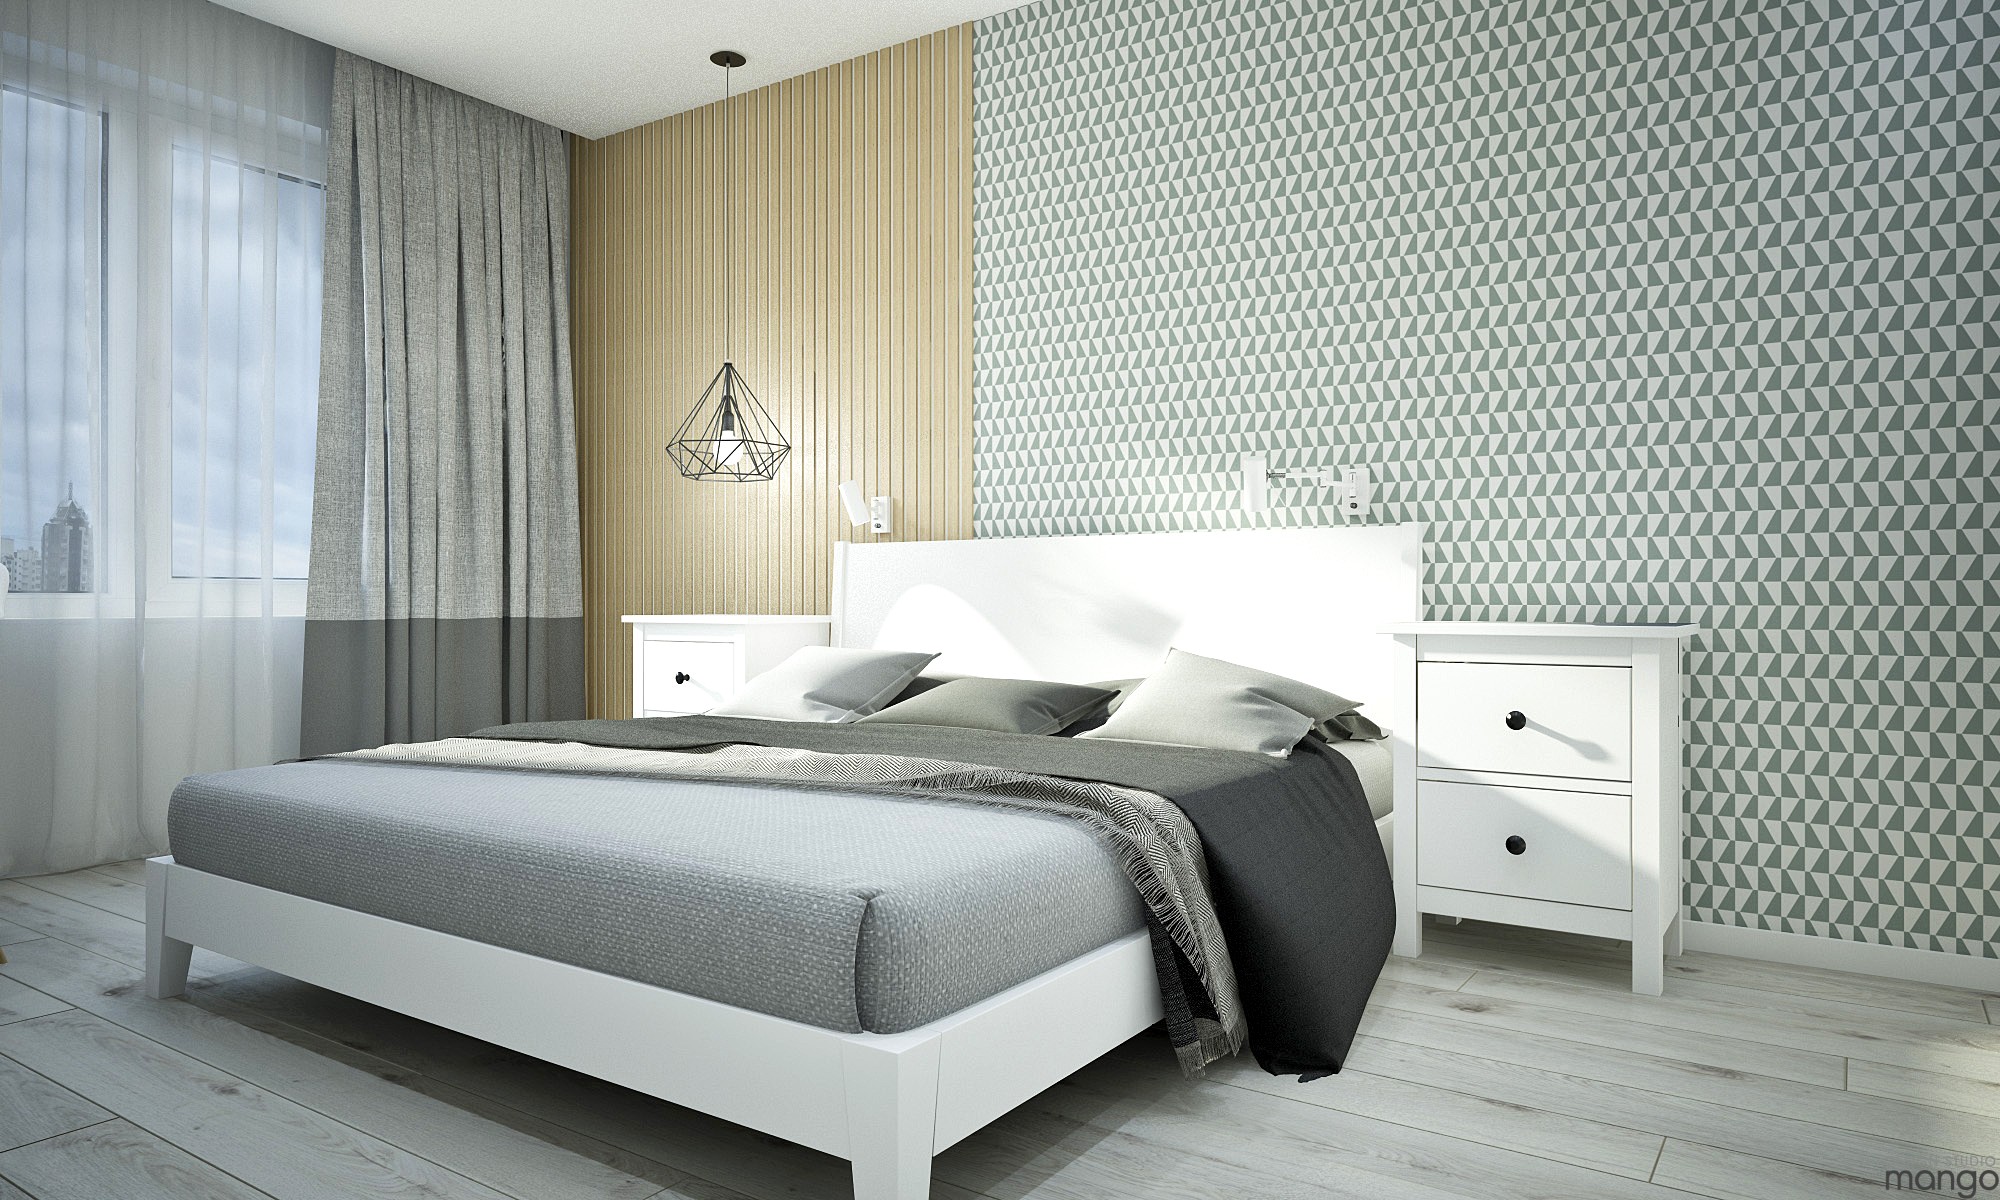 minimalist bedroom decor "width =" 2000 "height =" 1200 "srcset =" https://mileray.com/wp-content/uploads/2020/05/1588508610_807_Inspiration-Of-Bedroom-Decorating-Ideas-Which-Applying-a-Trendy-Design.jpg 2000w, https: // myfashionos .com / wp-content / uploads / 2016/11 / Design-Studio-Mango5-5-300x180.jpg 300w, https://mileray.com/wp-content/uploads/2016/11/Design-Studio-Mango5 - 5-768x461.jpg 768w, https://mileray.com/wp-content/uploads/2016/11/Design-Studio-Mango5-5-1024x614.jpg 1024w, https://mileray.com/wp-content / uploads / 2016/11 / Design-Studio-Mango5-5-696x418.jpg 696w, https://mileray.com/wp-content/uploads/2016/11/Design-Studio-Mango5-5-1068x641.jpg 1068w, https://mileray.com/wp-content/uploads/2016/11/Design-Studio-Mango5-5-700x420.jpg 700w "sizes =" (maximum width: 2000px) 100vw, 2000px